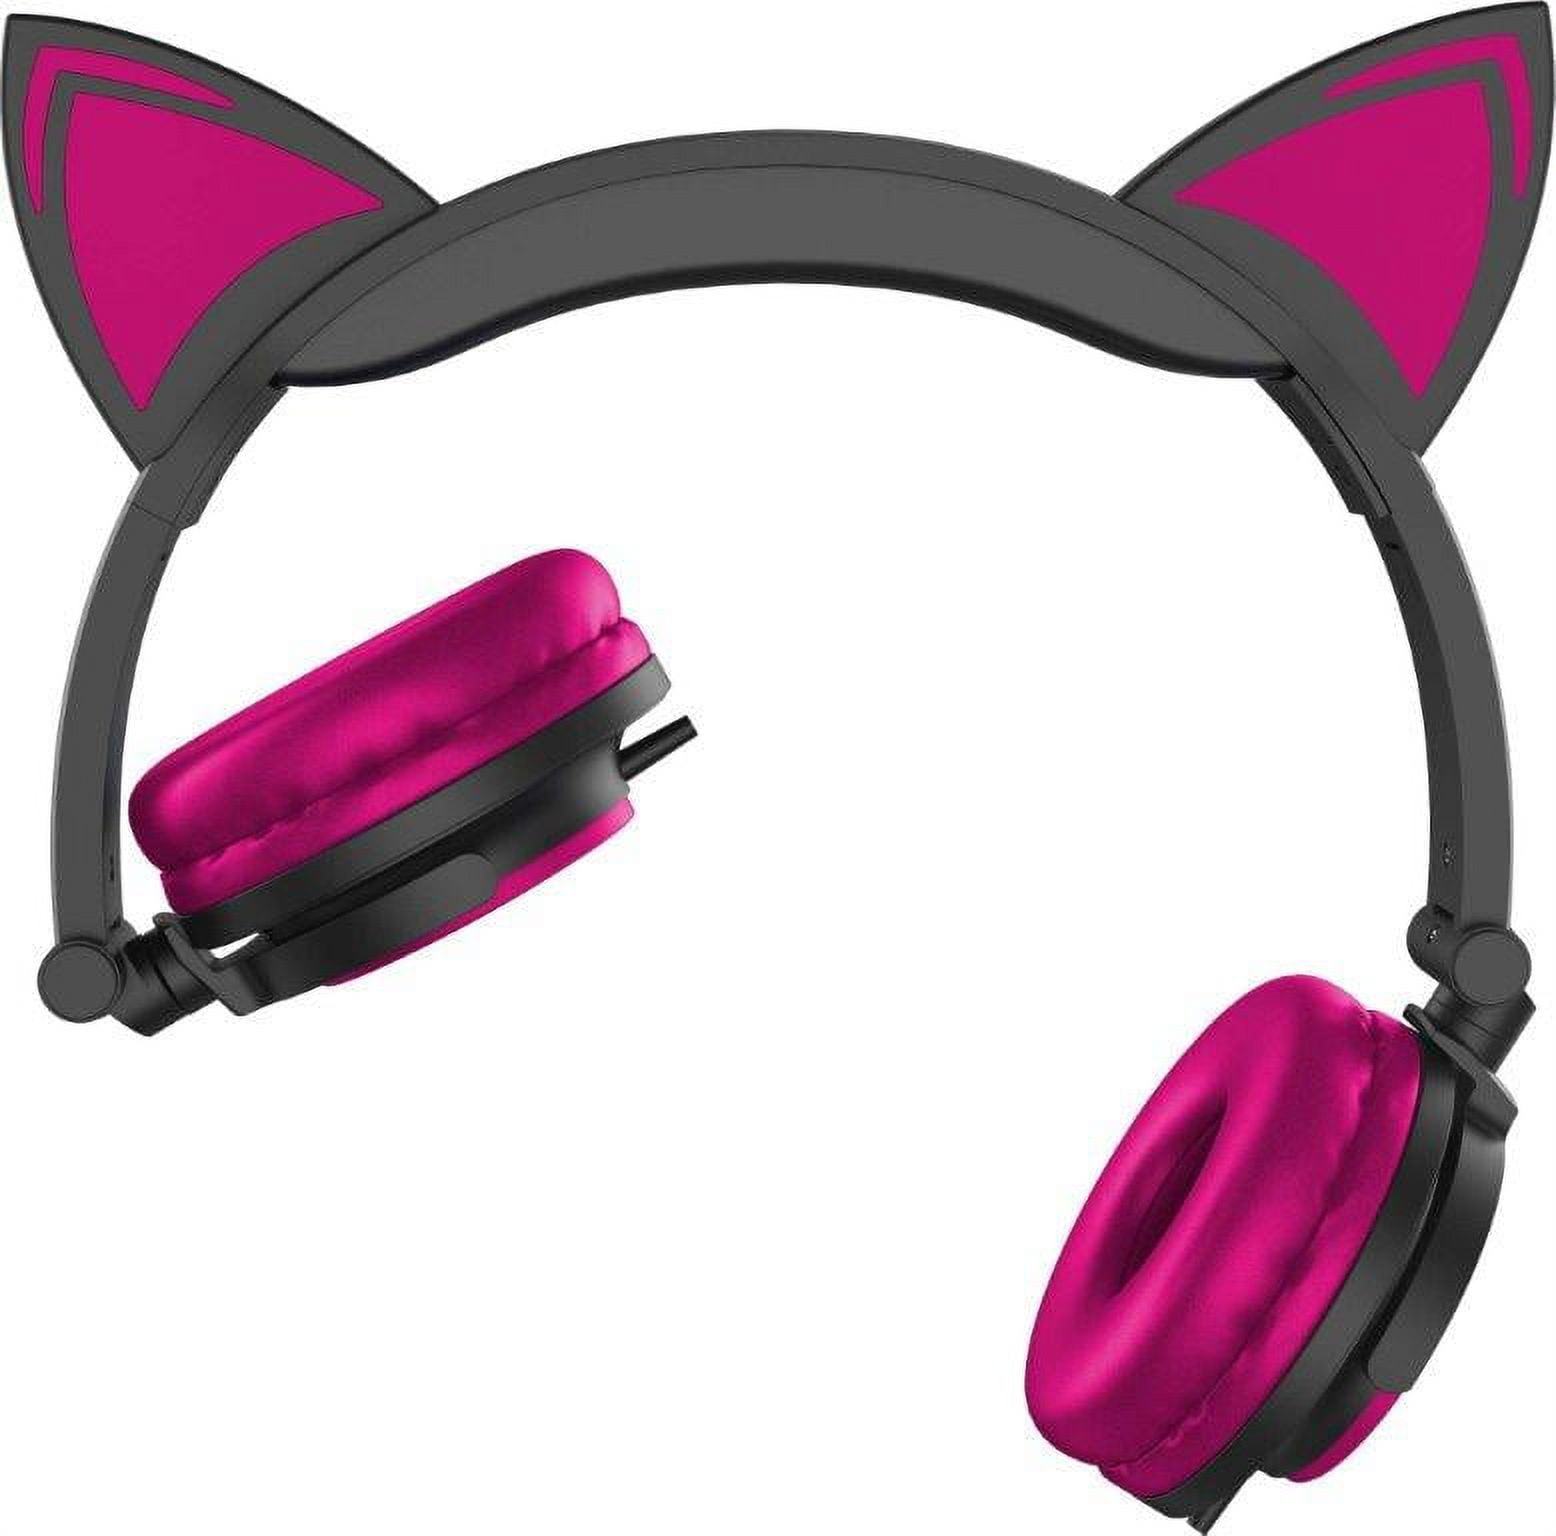 Ledeez Wired Pink LED Cat Ear Foldable Headphones with 3.5mm Jack Plug 